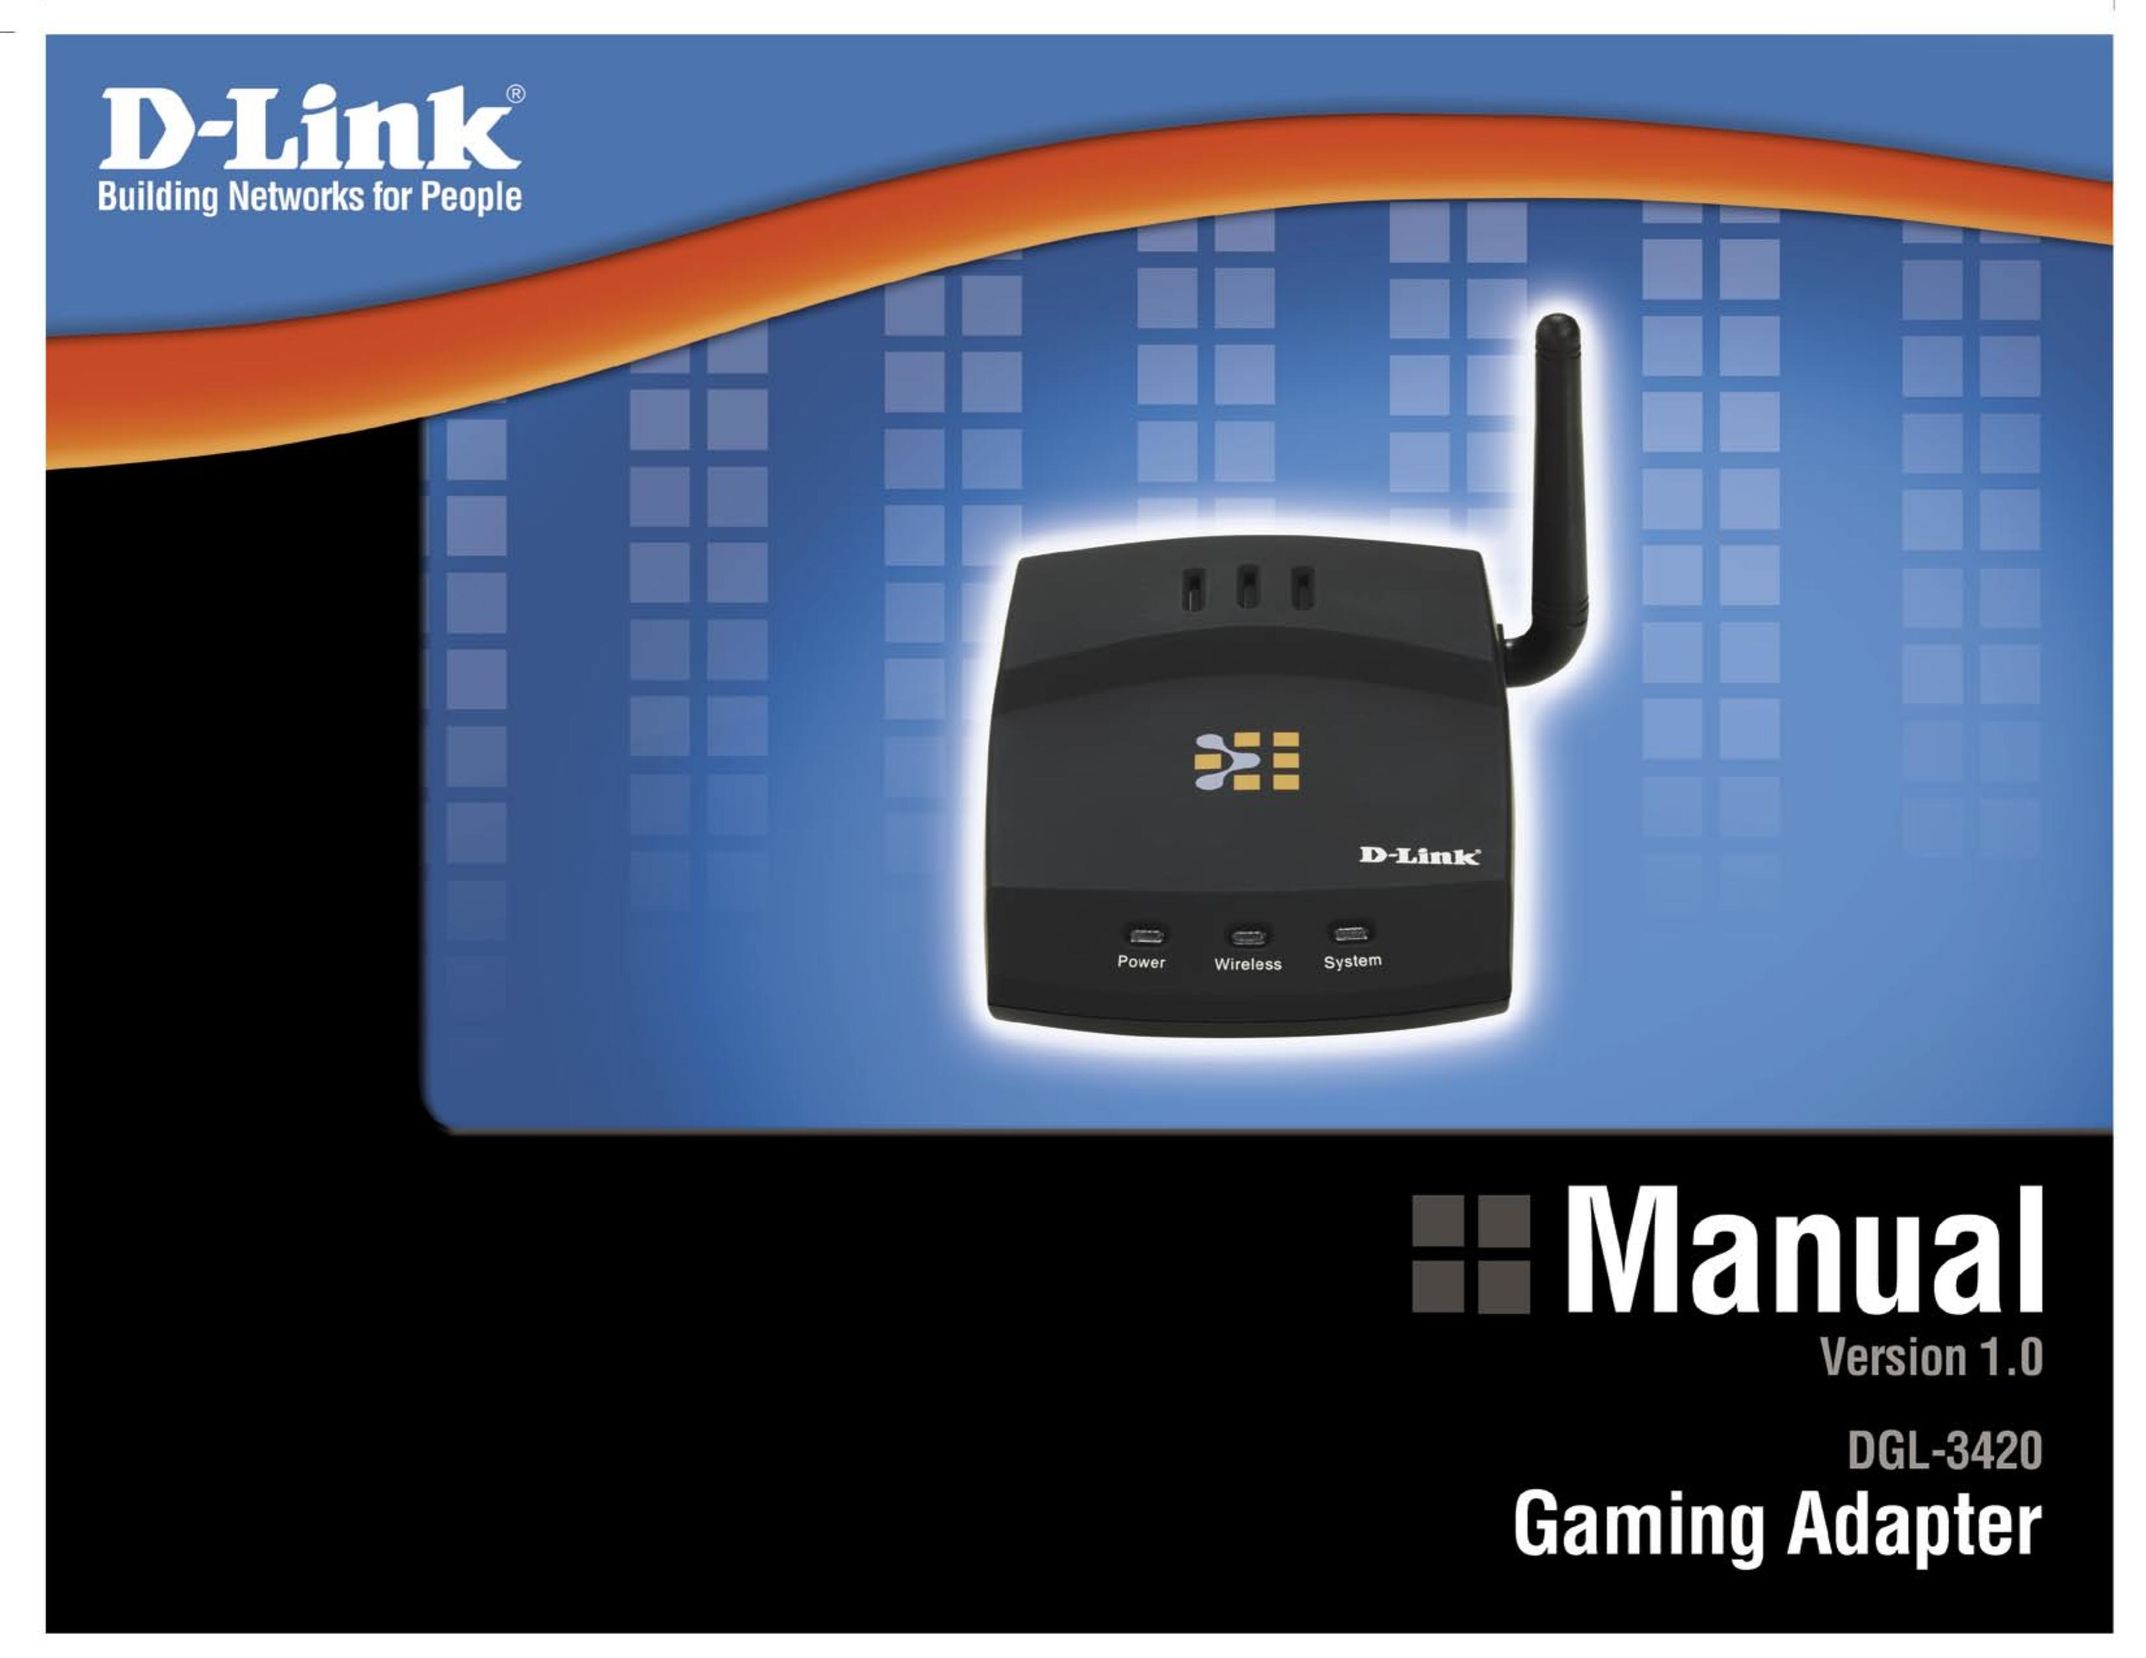 D-Link DGL-3420 Video Gaming Accessories User Manual